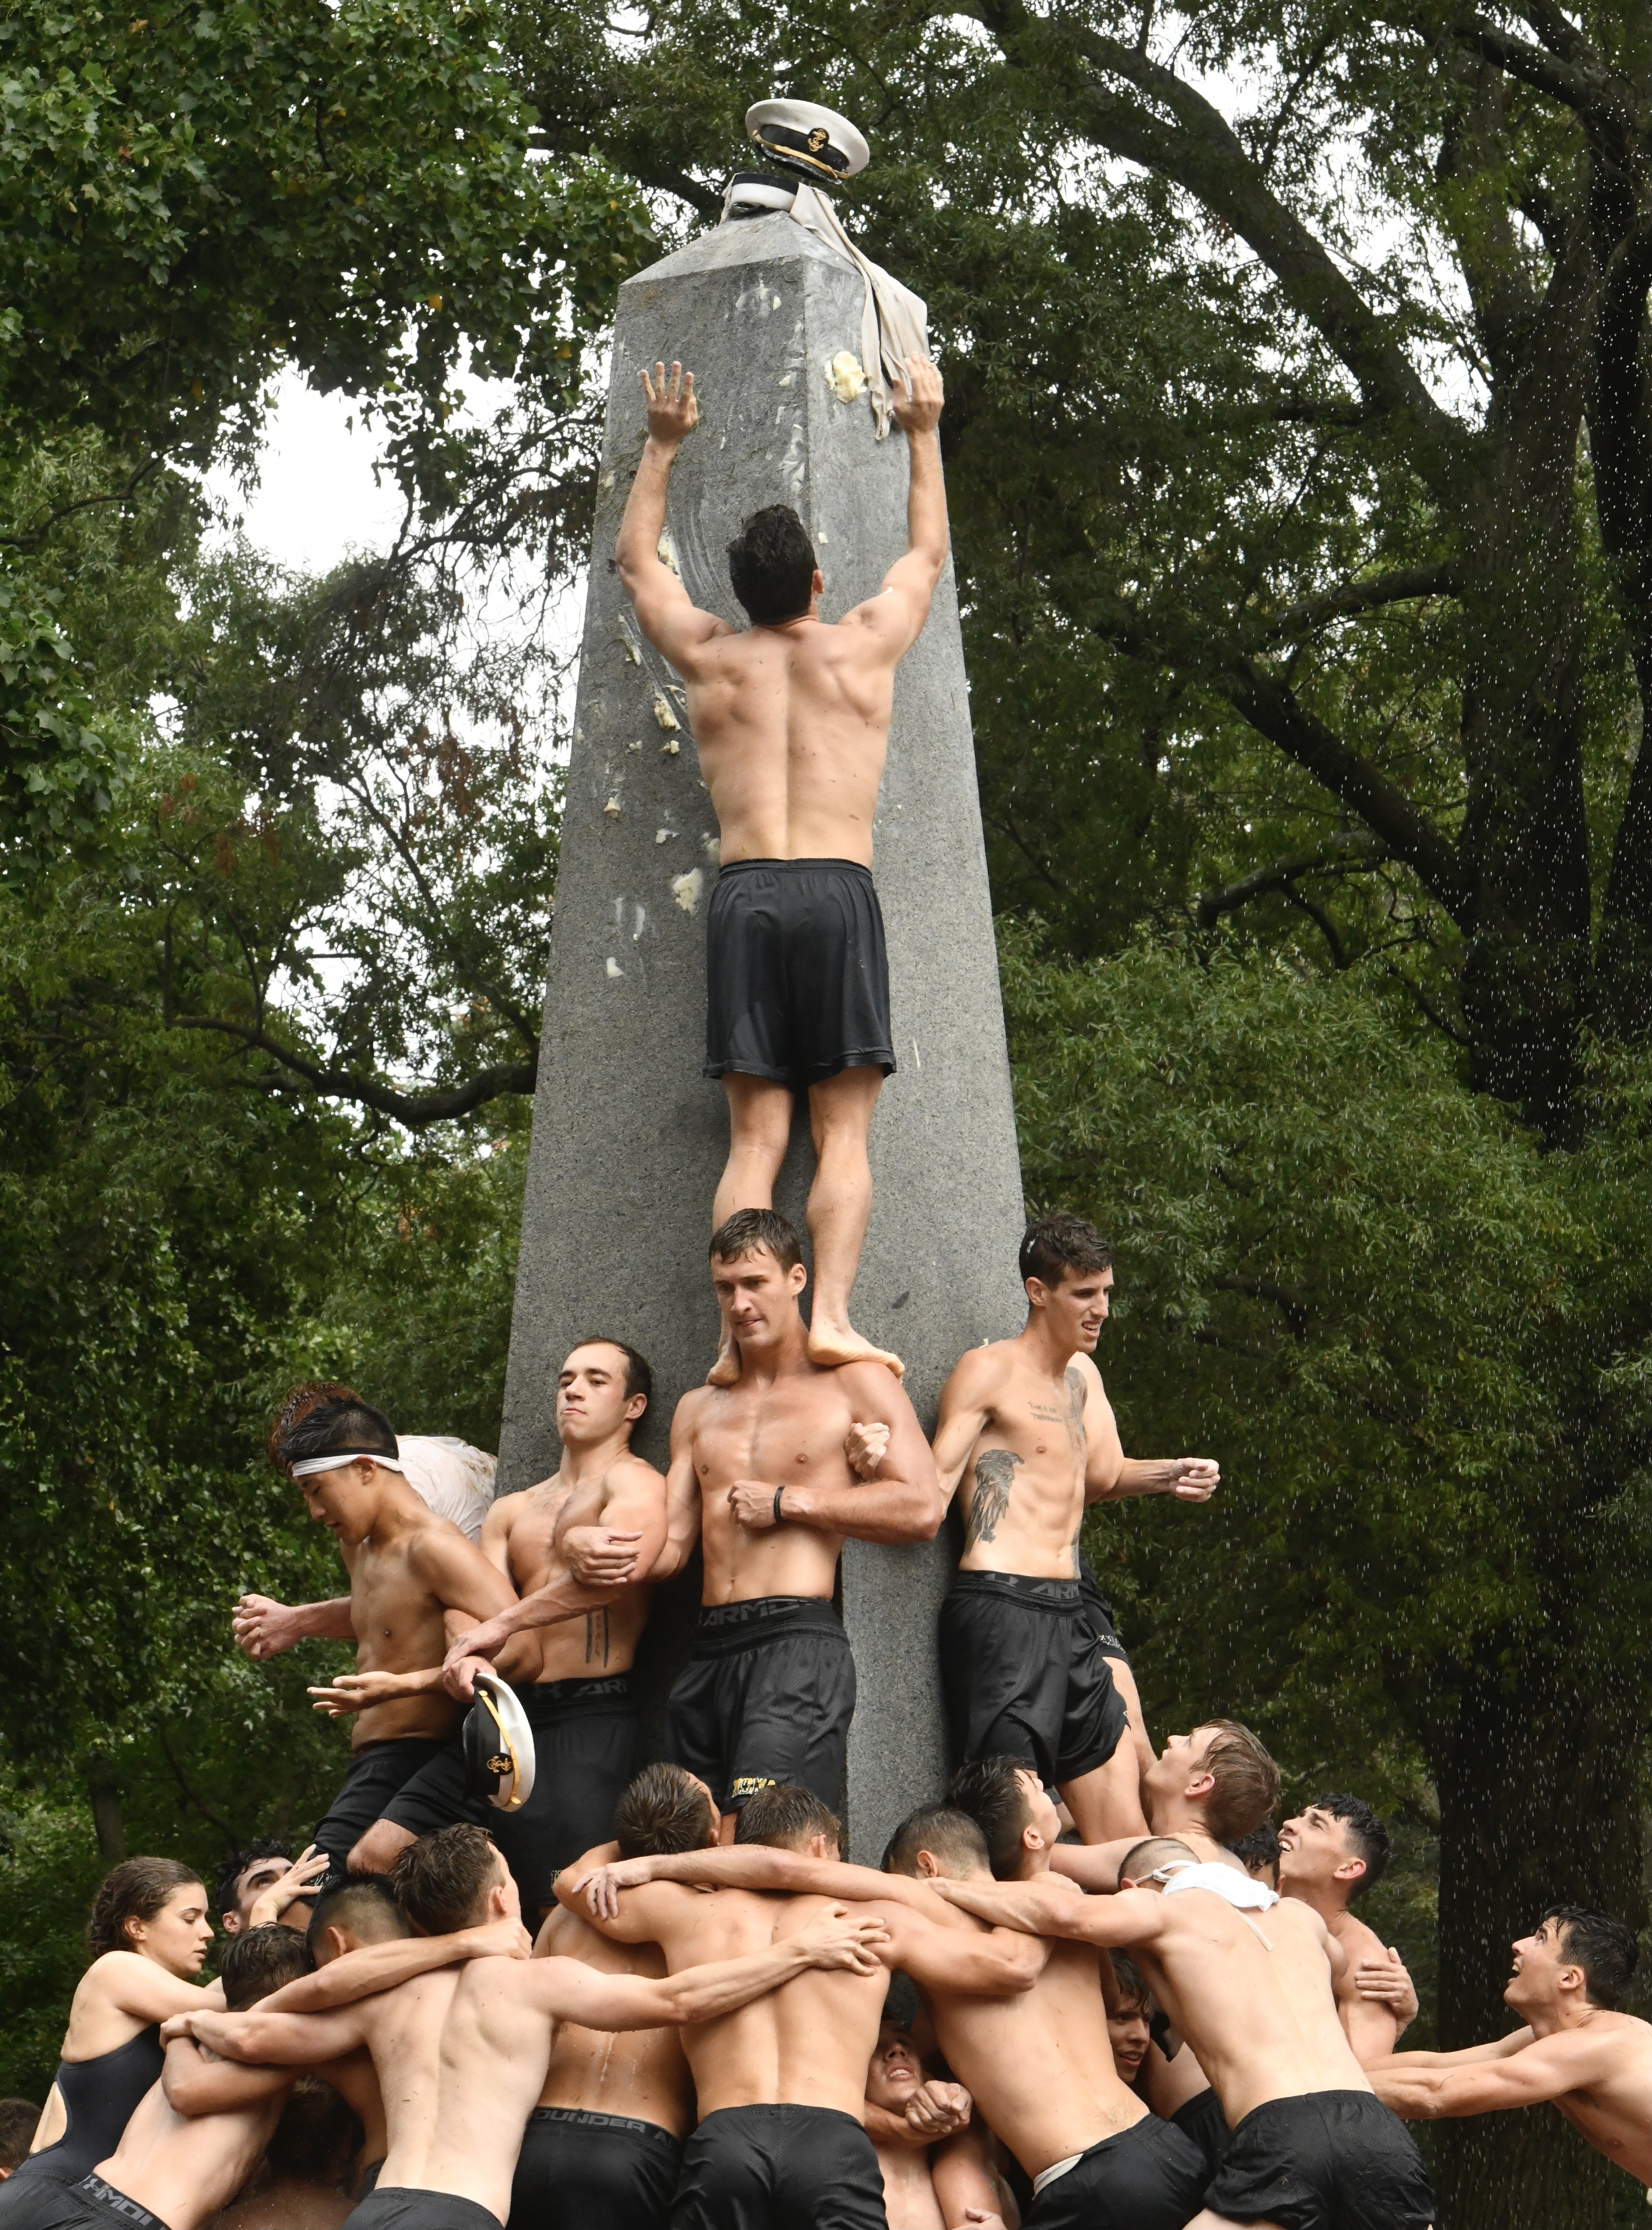 tumblr gay videos guys climbing up poles